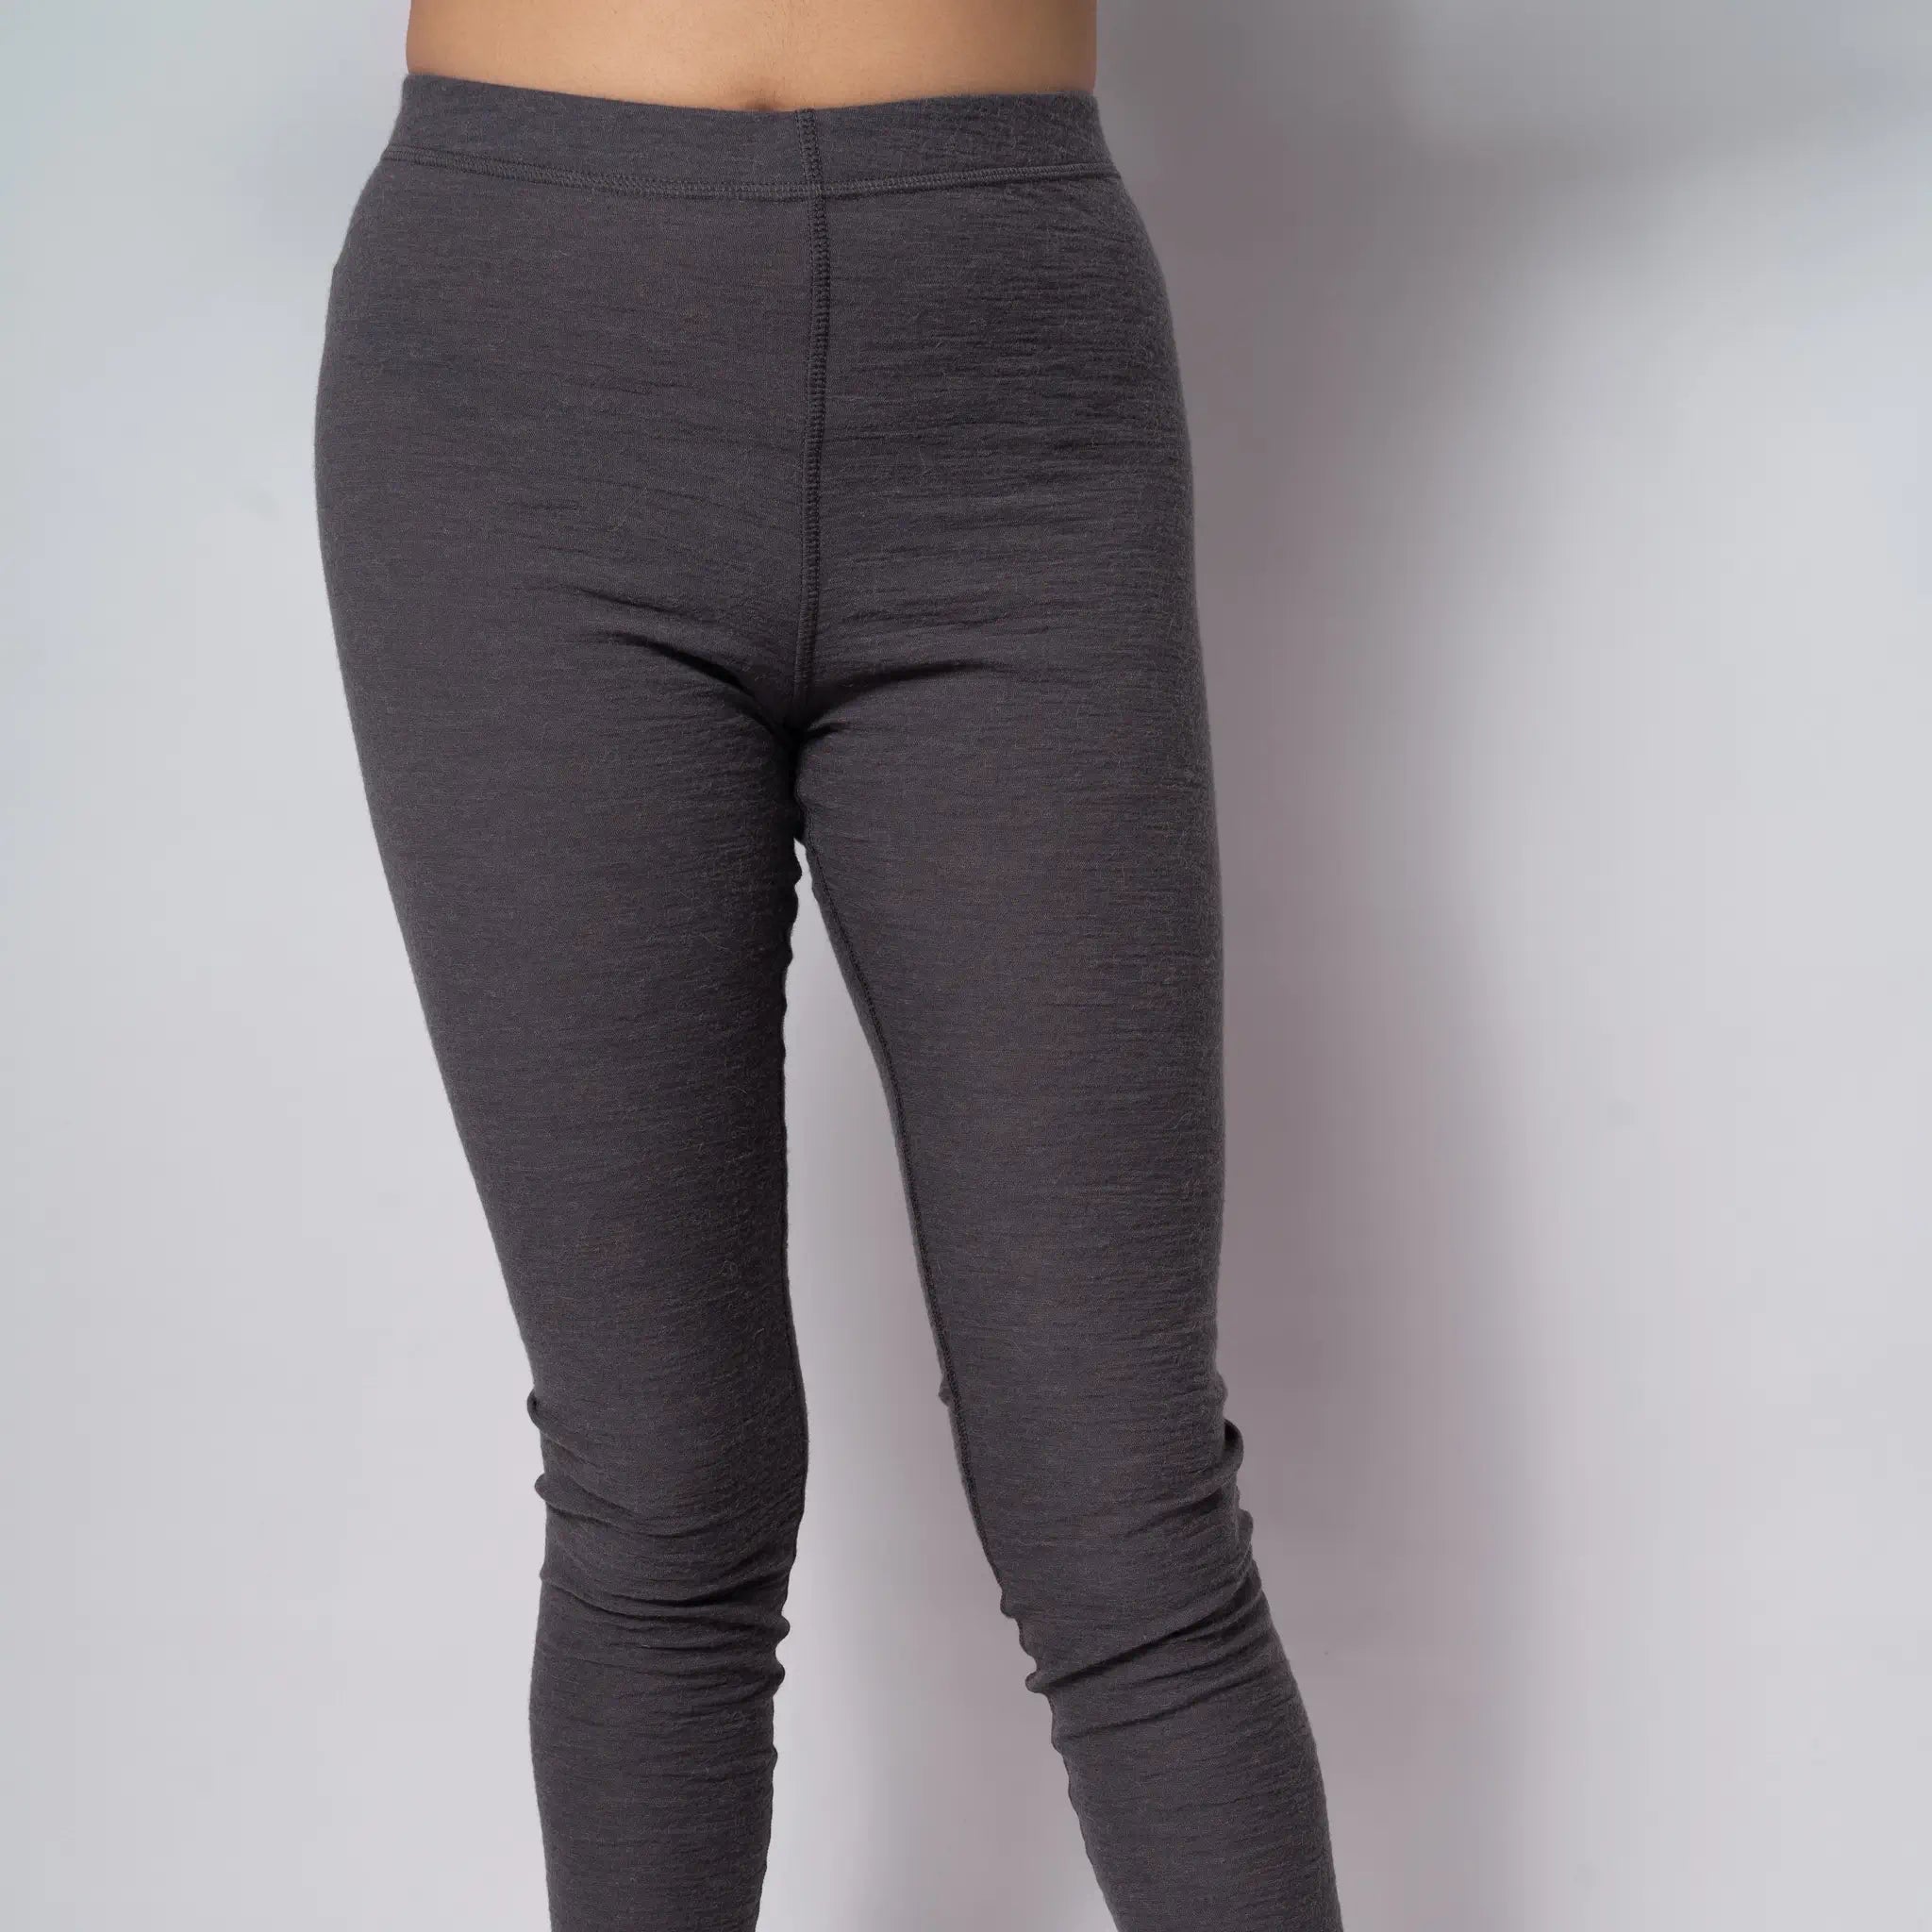 womens leggings ultralight160 adventure color gray